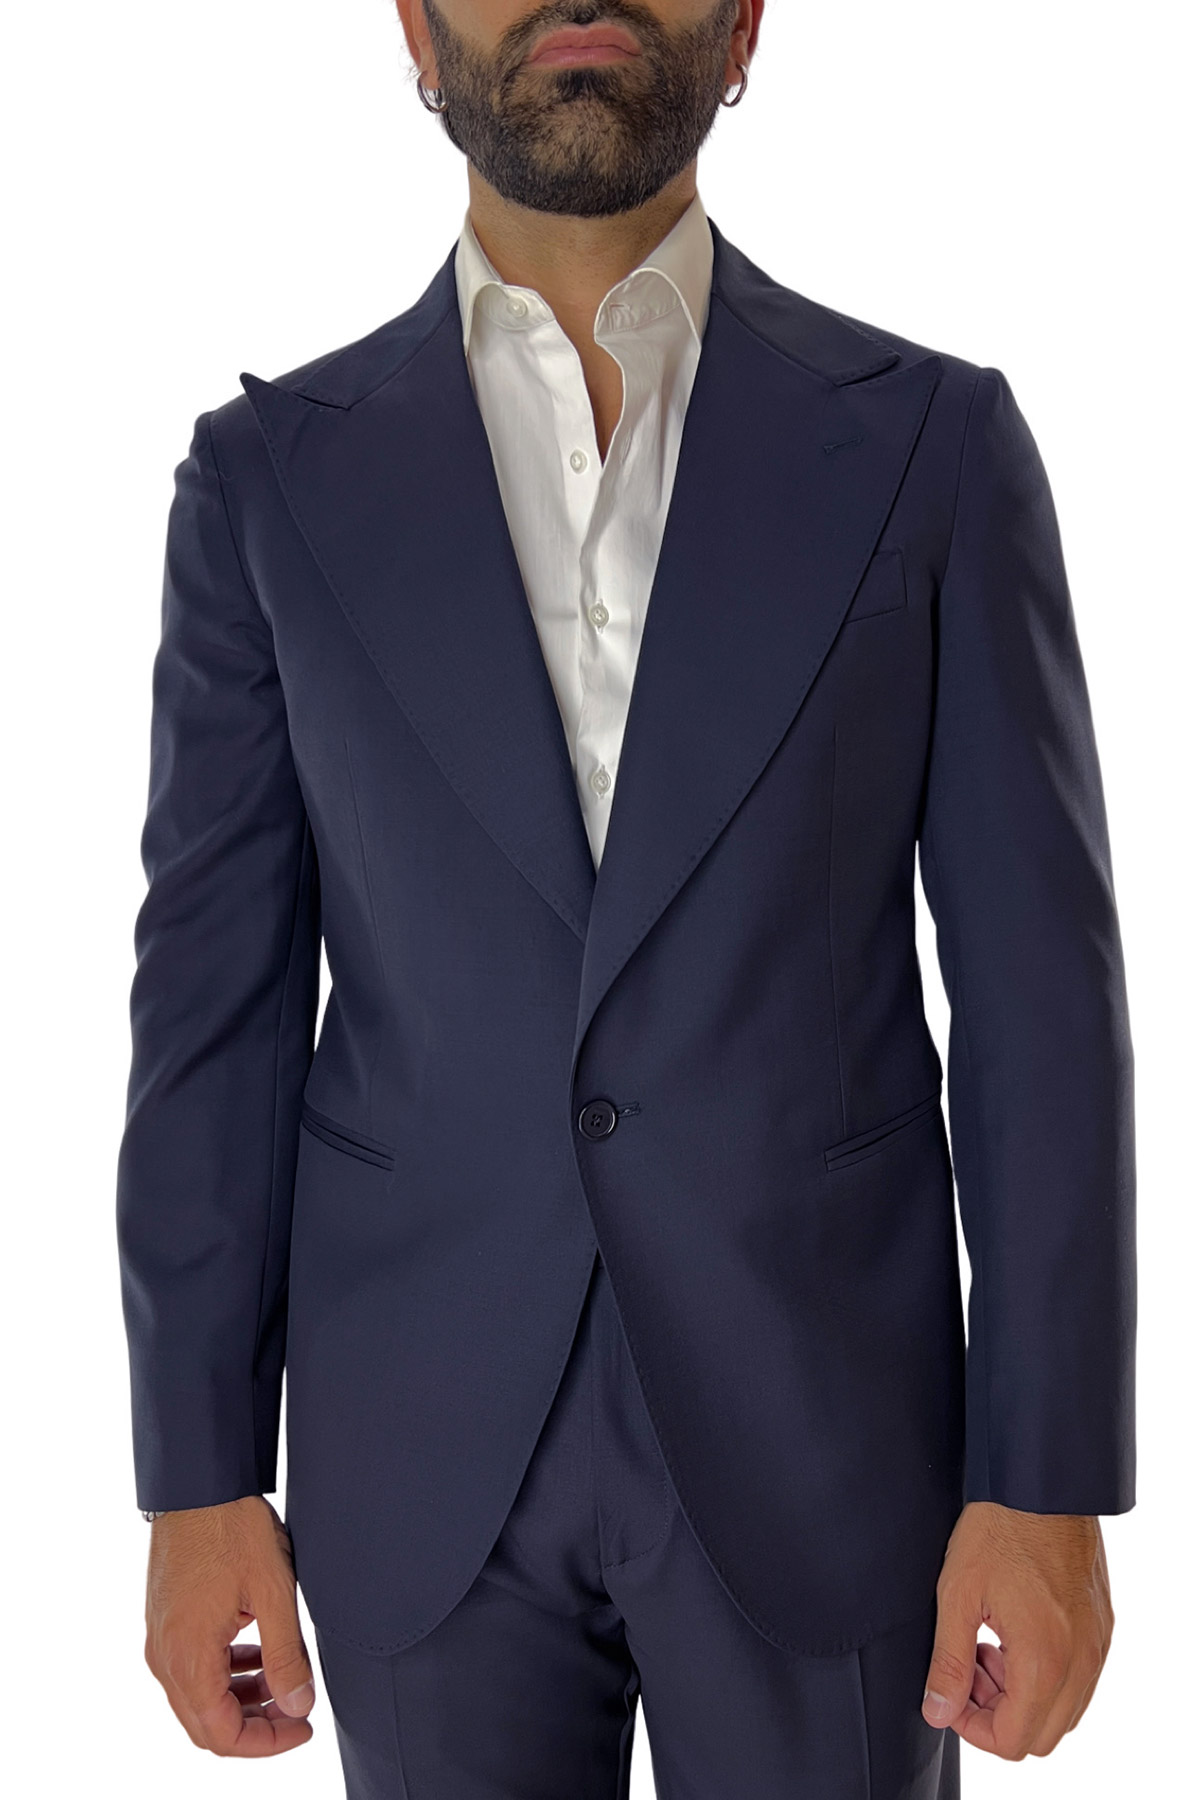 MODA UOMO Giacche Elegante Selected Blazer sconto 52% Blu navy M 